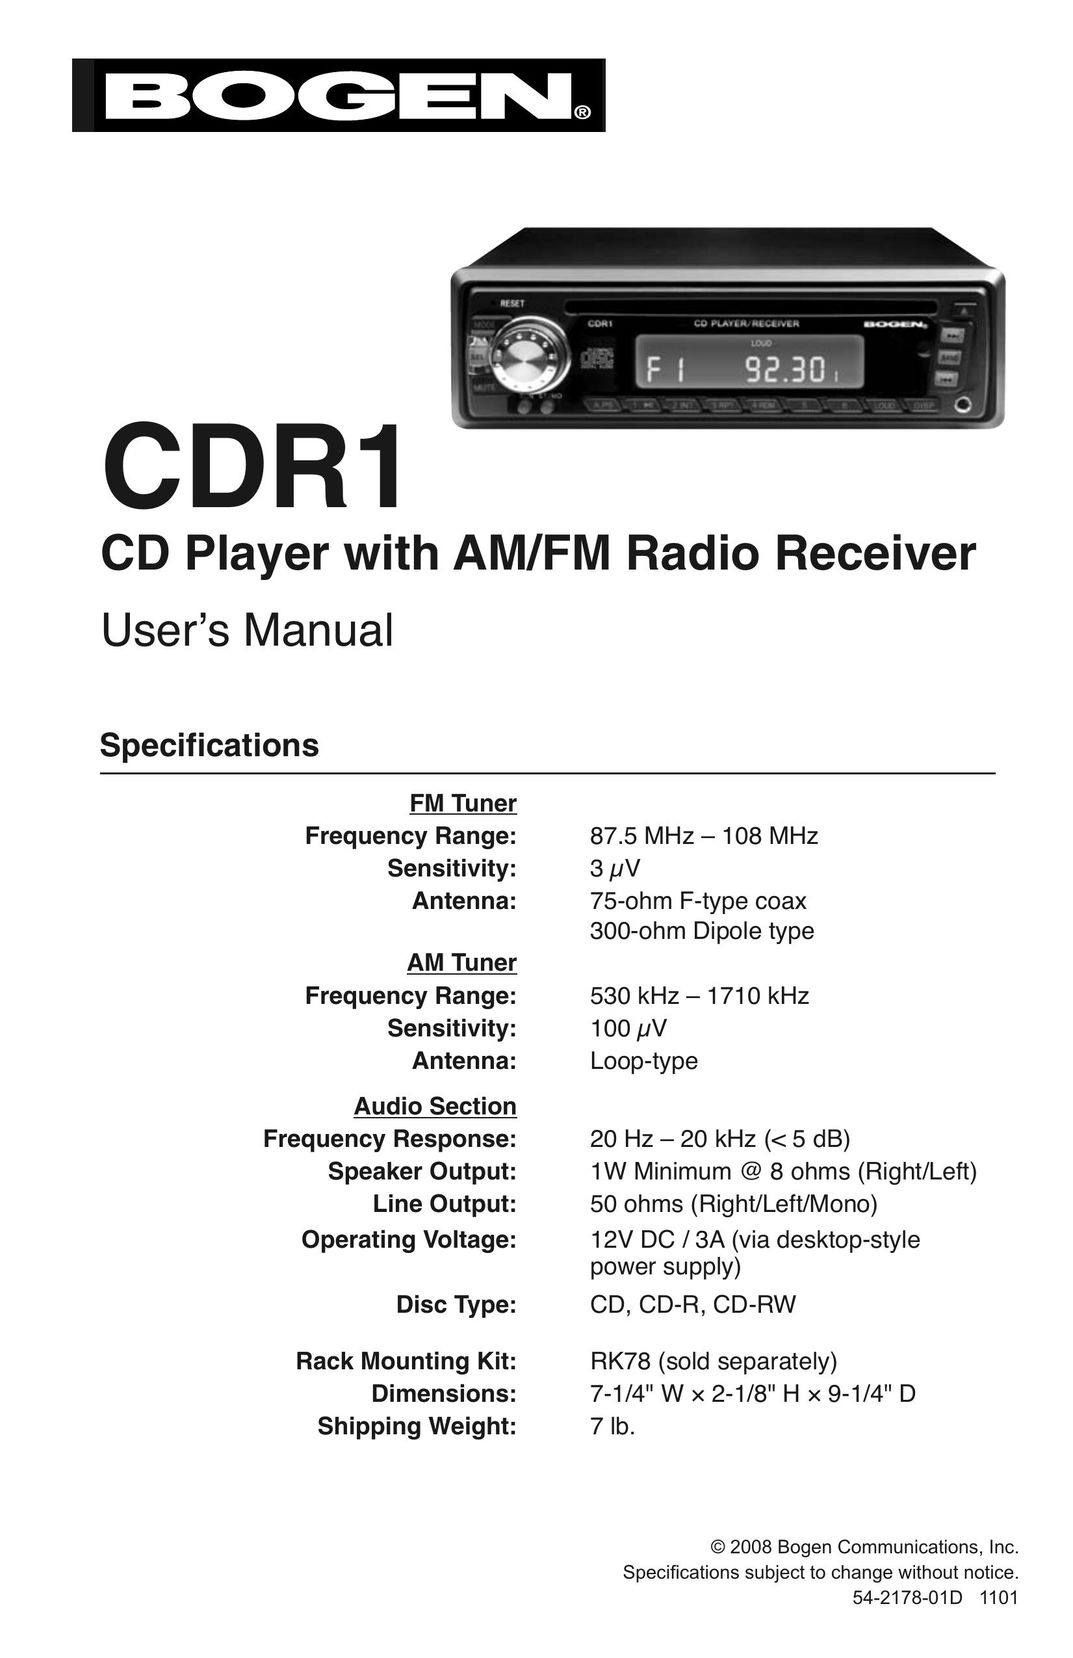 Bogen CDR1 CD Player User Manual